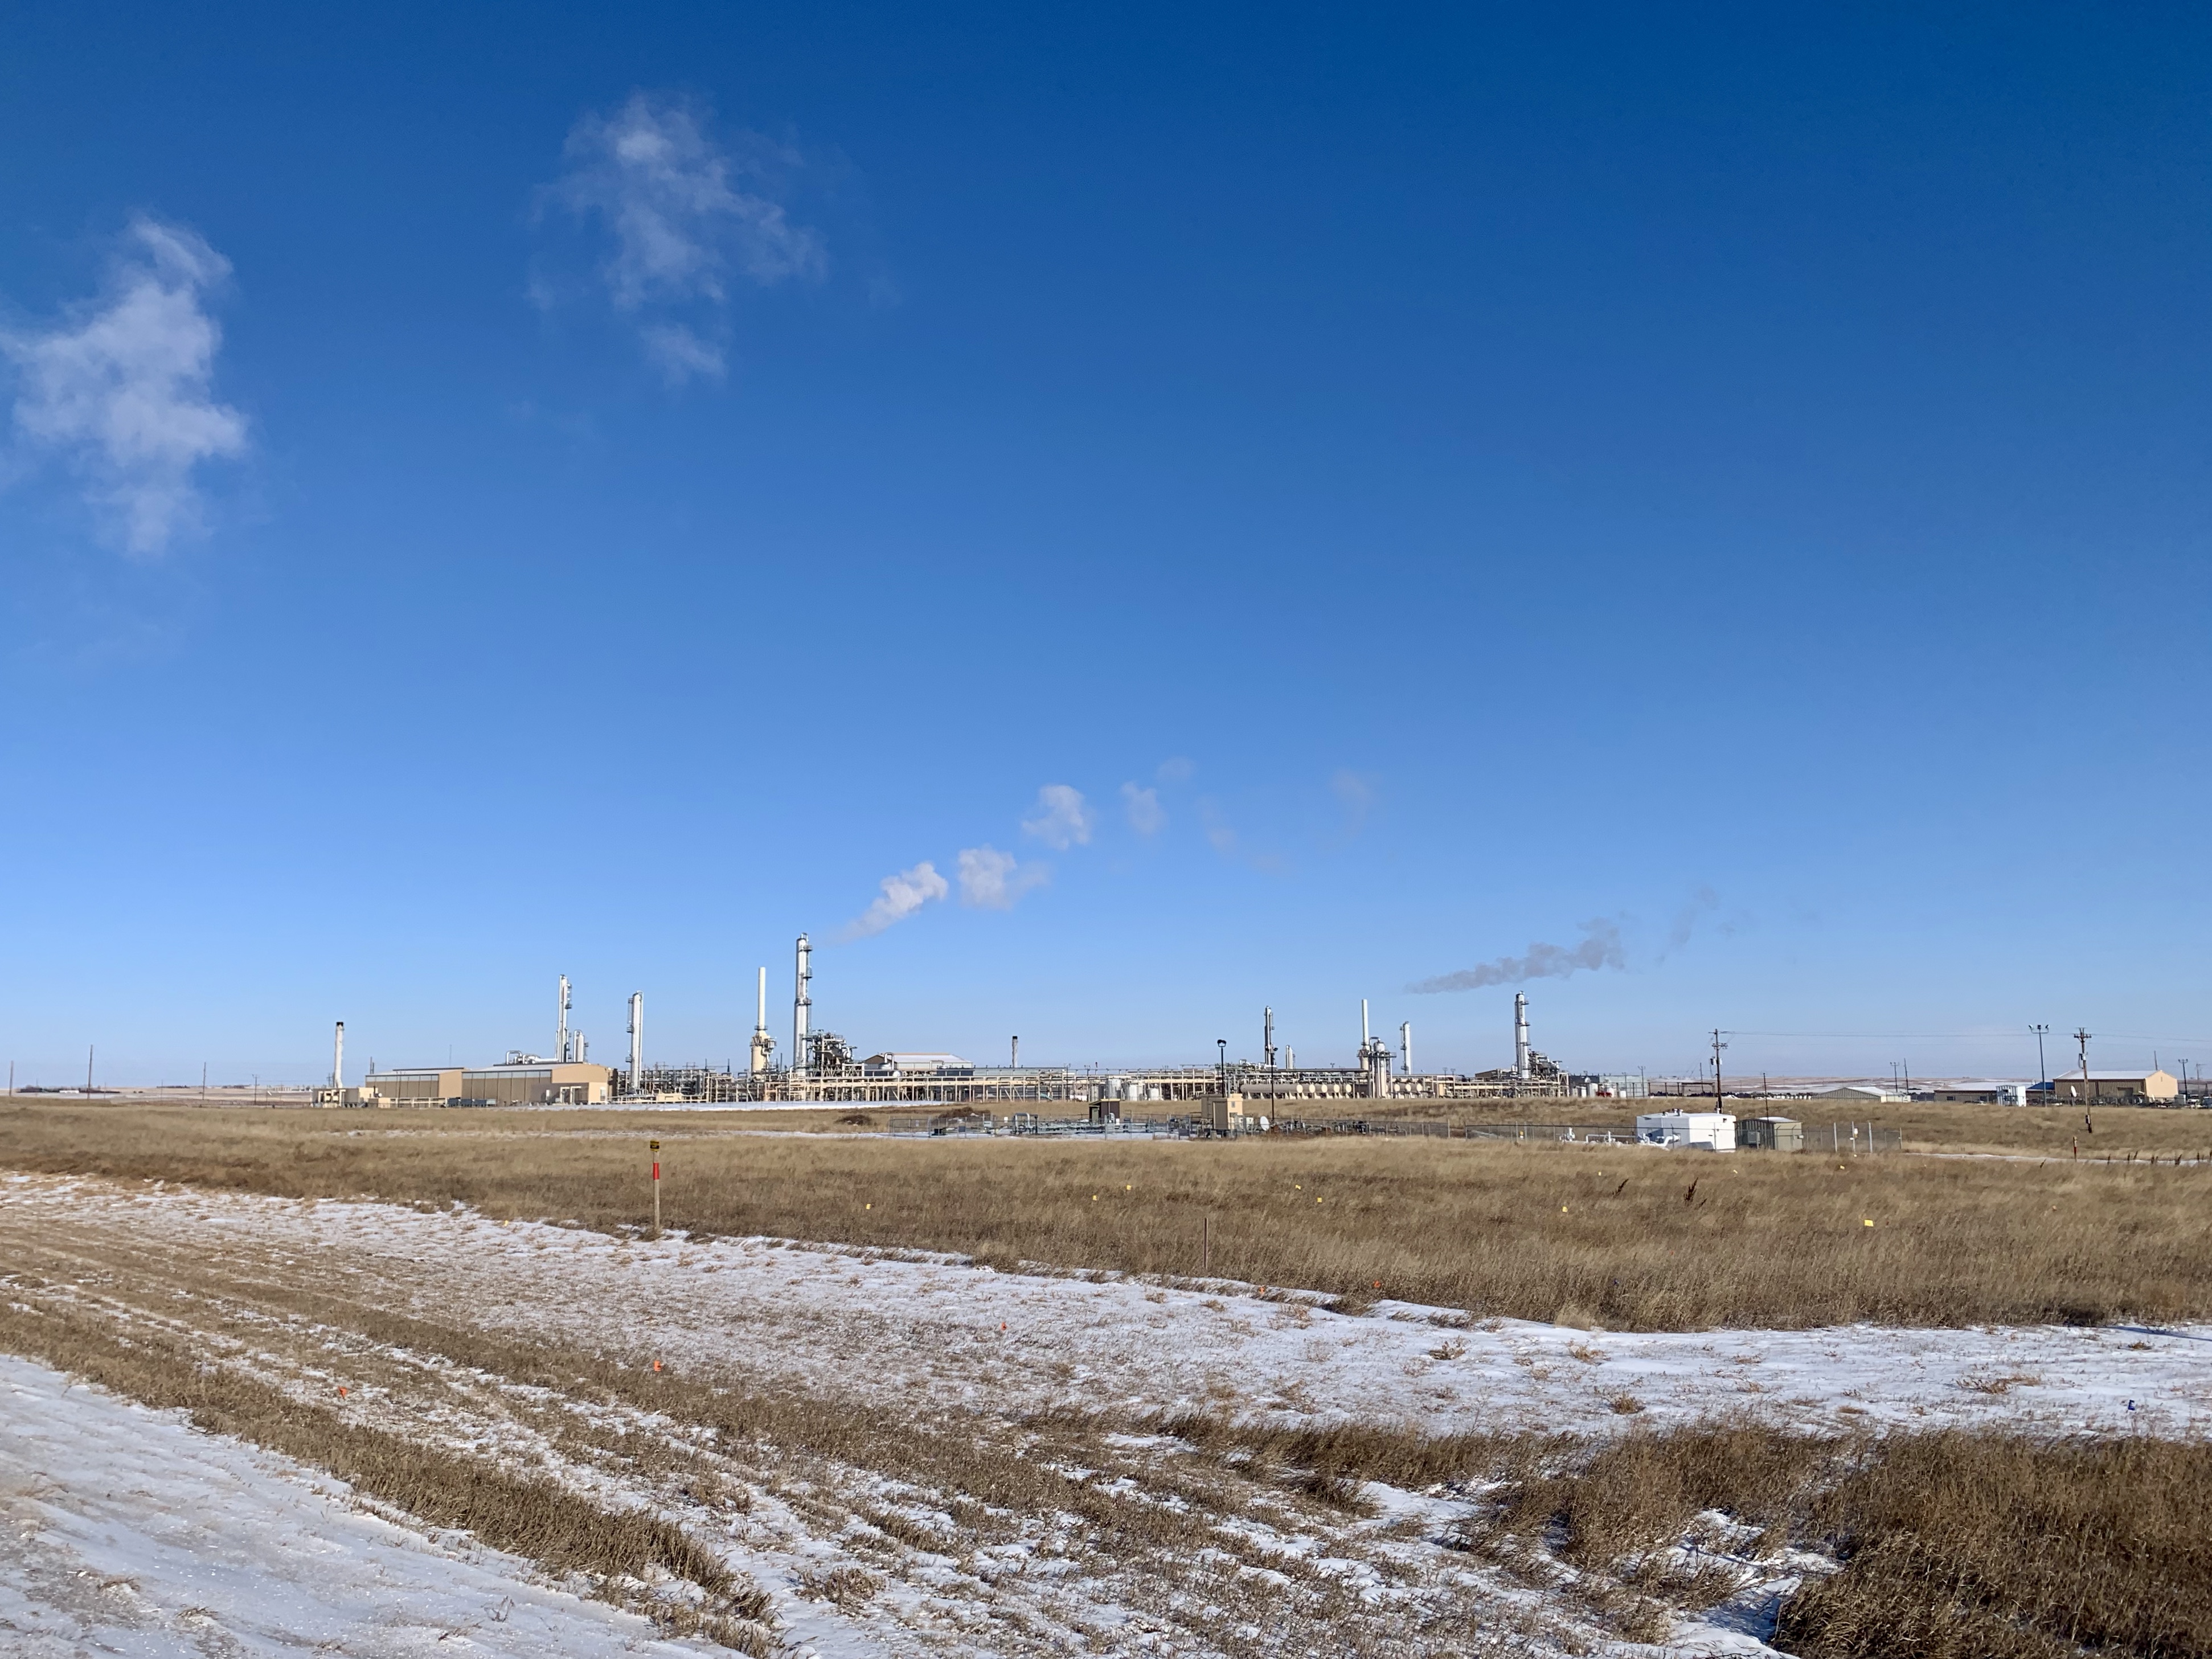 Energy development in rural North Dakota